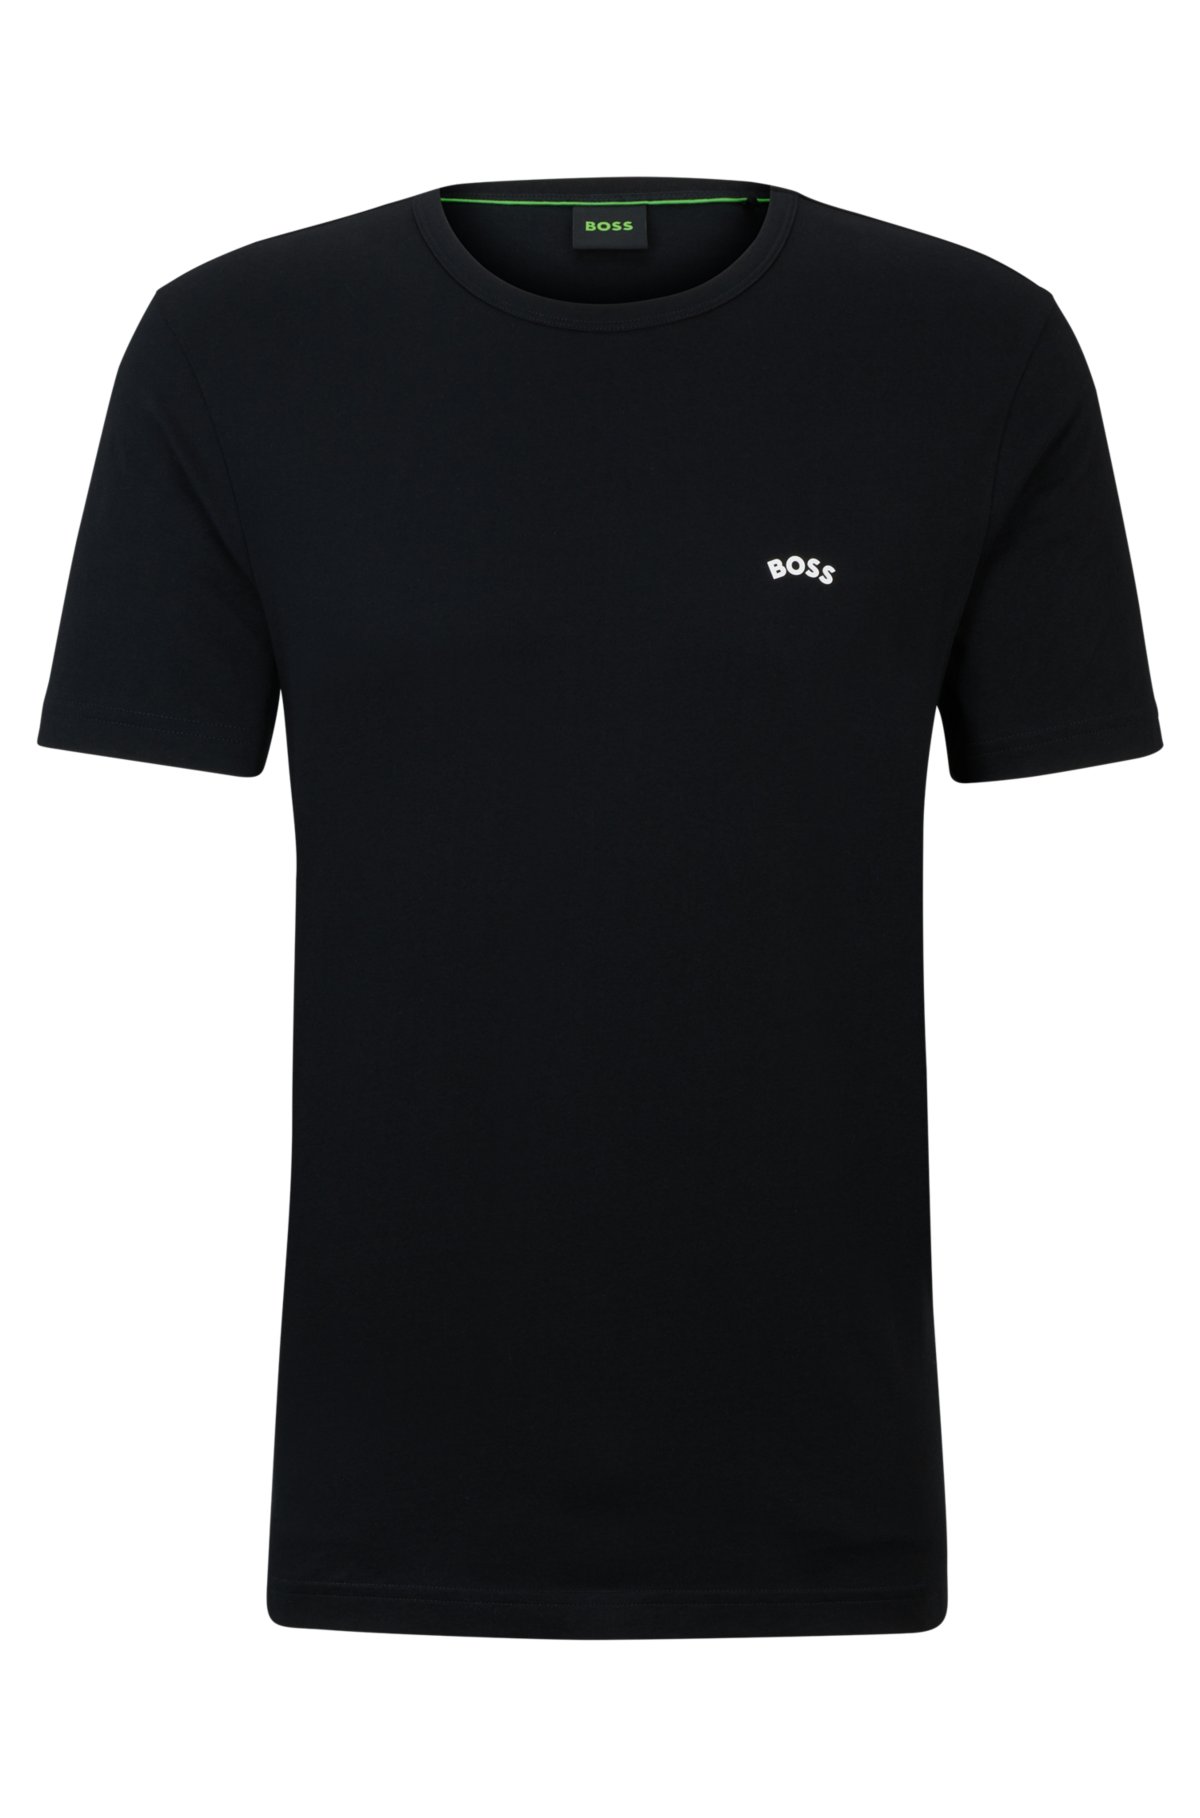 Toepassen Verbinding beven BOSS - Crew-neck T-shirt in organic cotton with curved logo